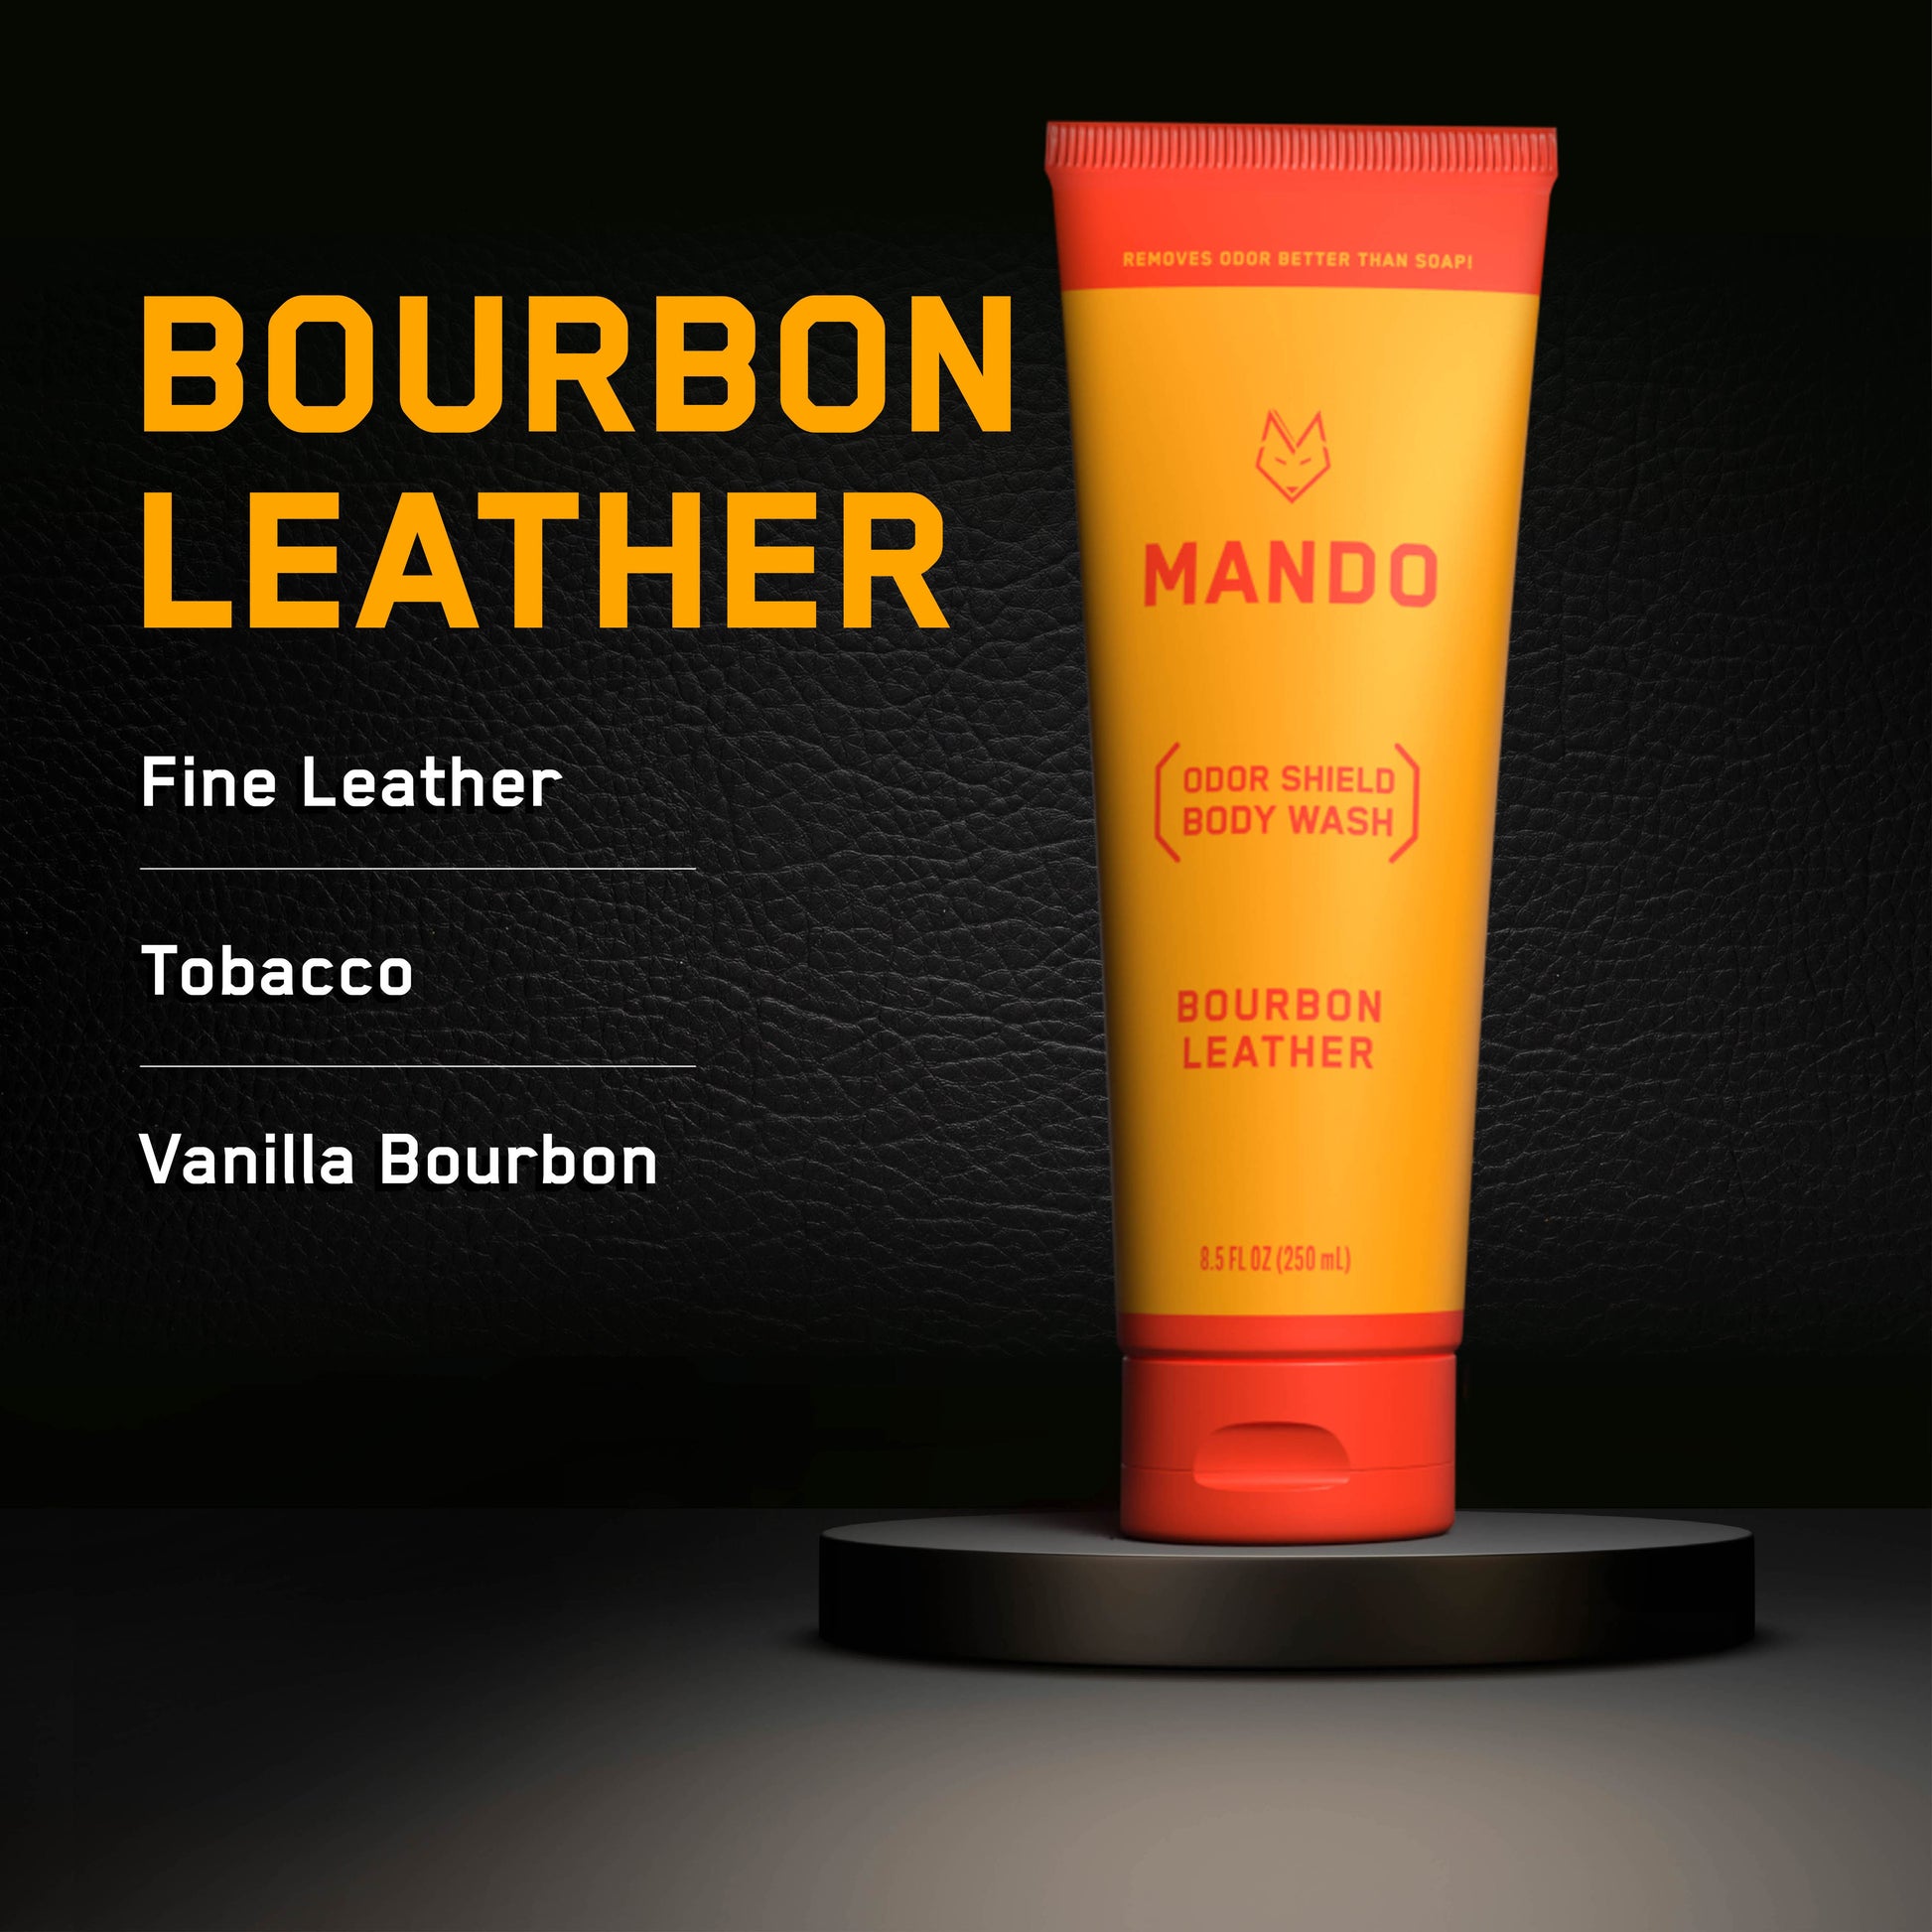 Mando body wash in bourbon leather with text: fine leather, tobacco, vanilla bourbon 